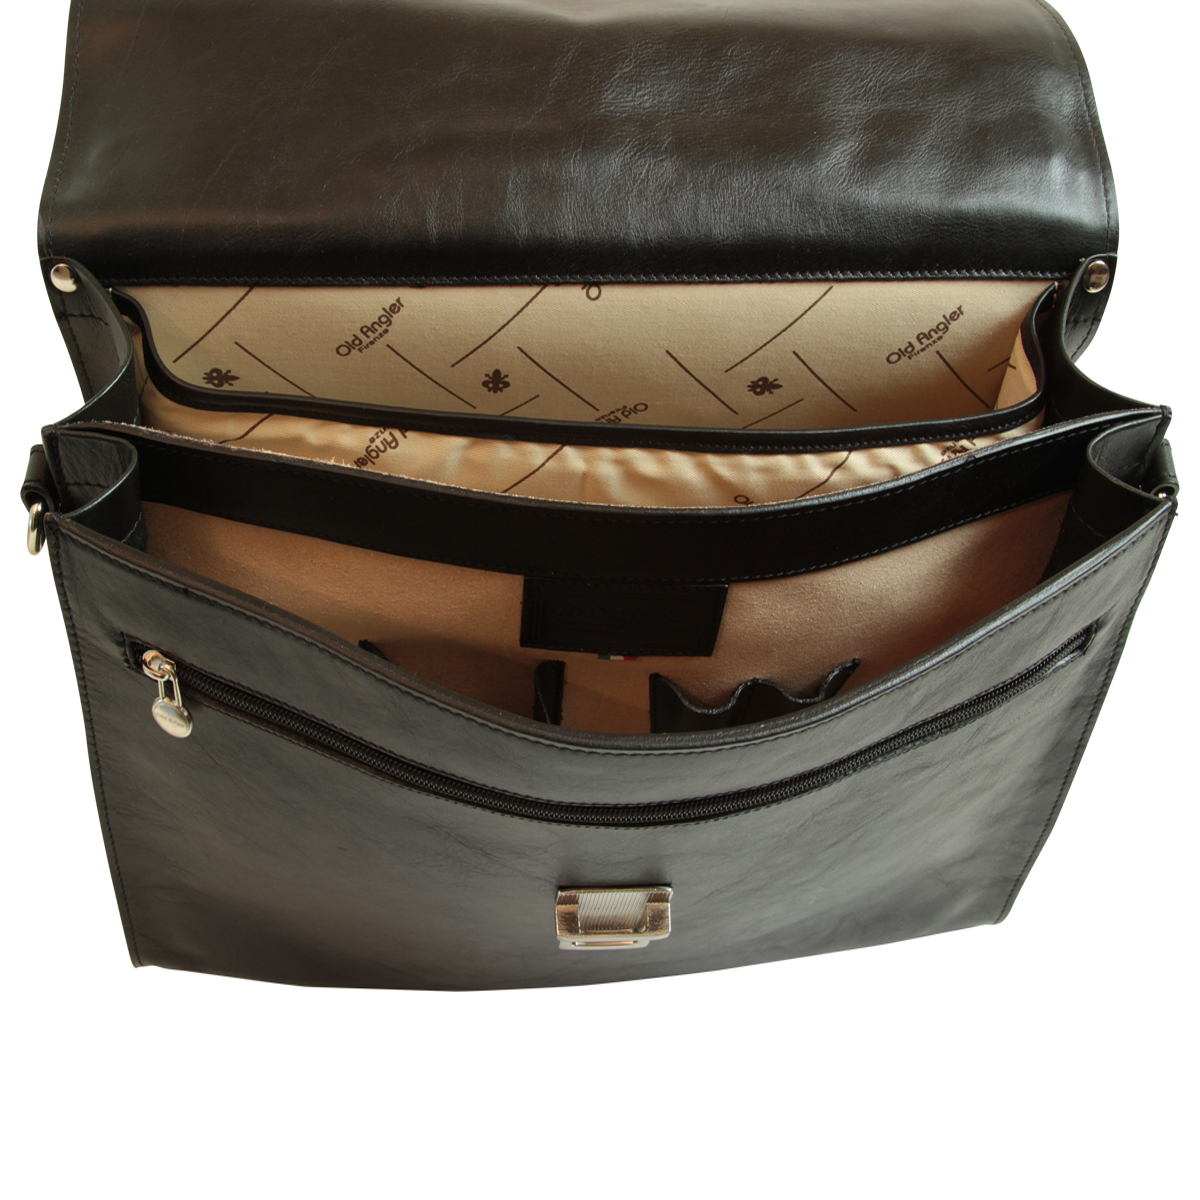 Leather Laptop Briefcase - Black | 052889NE US | Old Angler Firenze